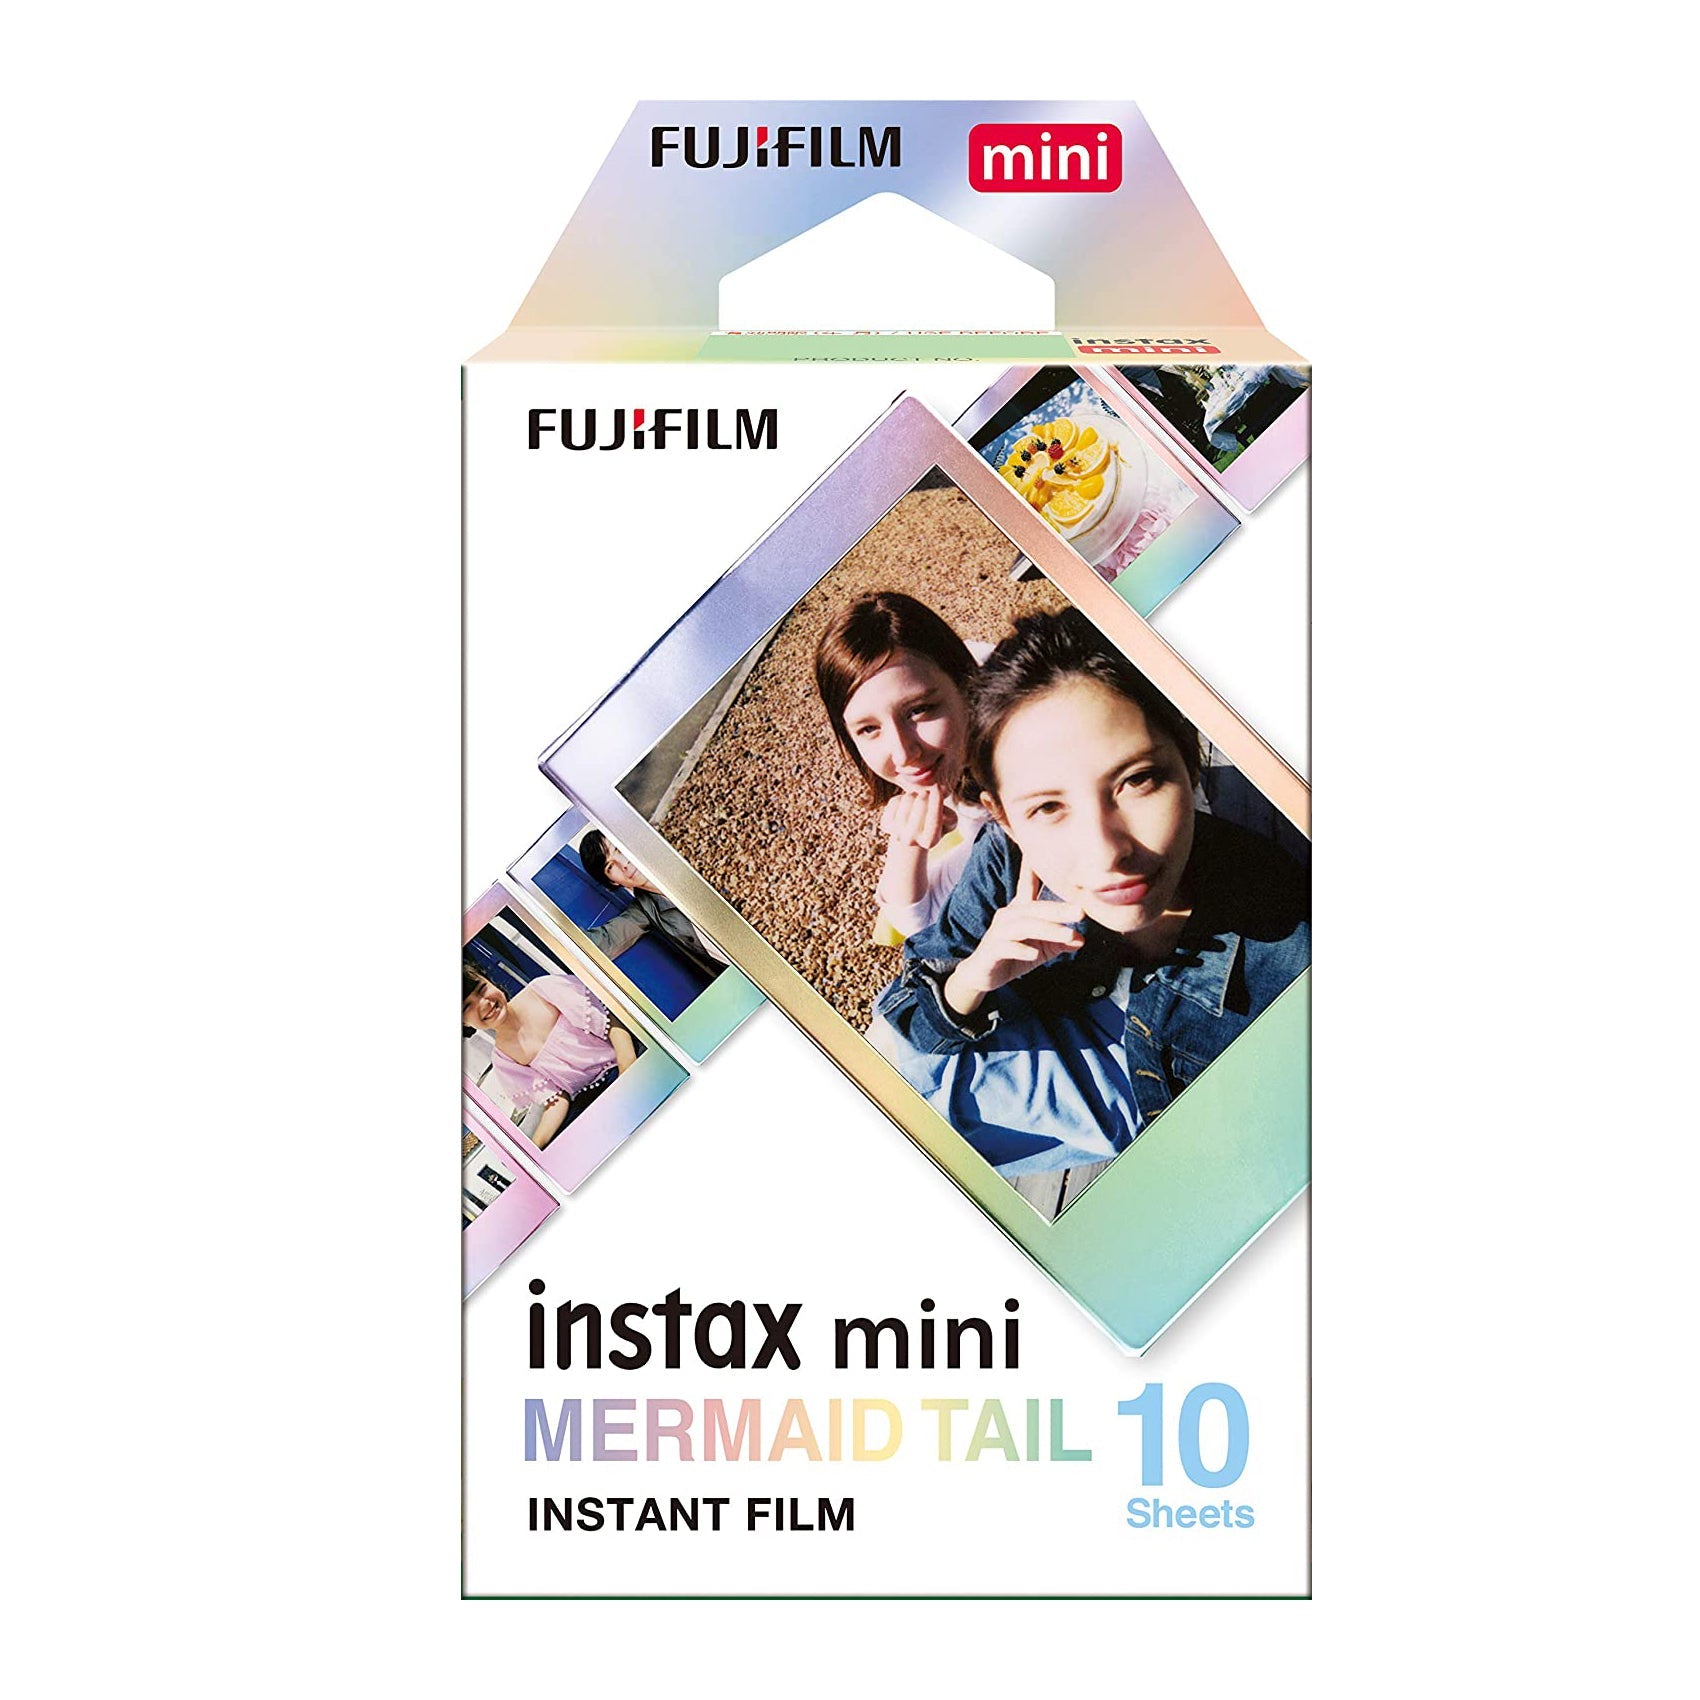 Fujifilm Instax Mini 10X1 mermaid tail Instant Film with Instax Time Photo Album 64 Sheets (Orange)